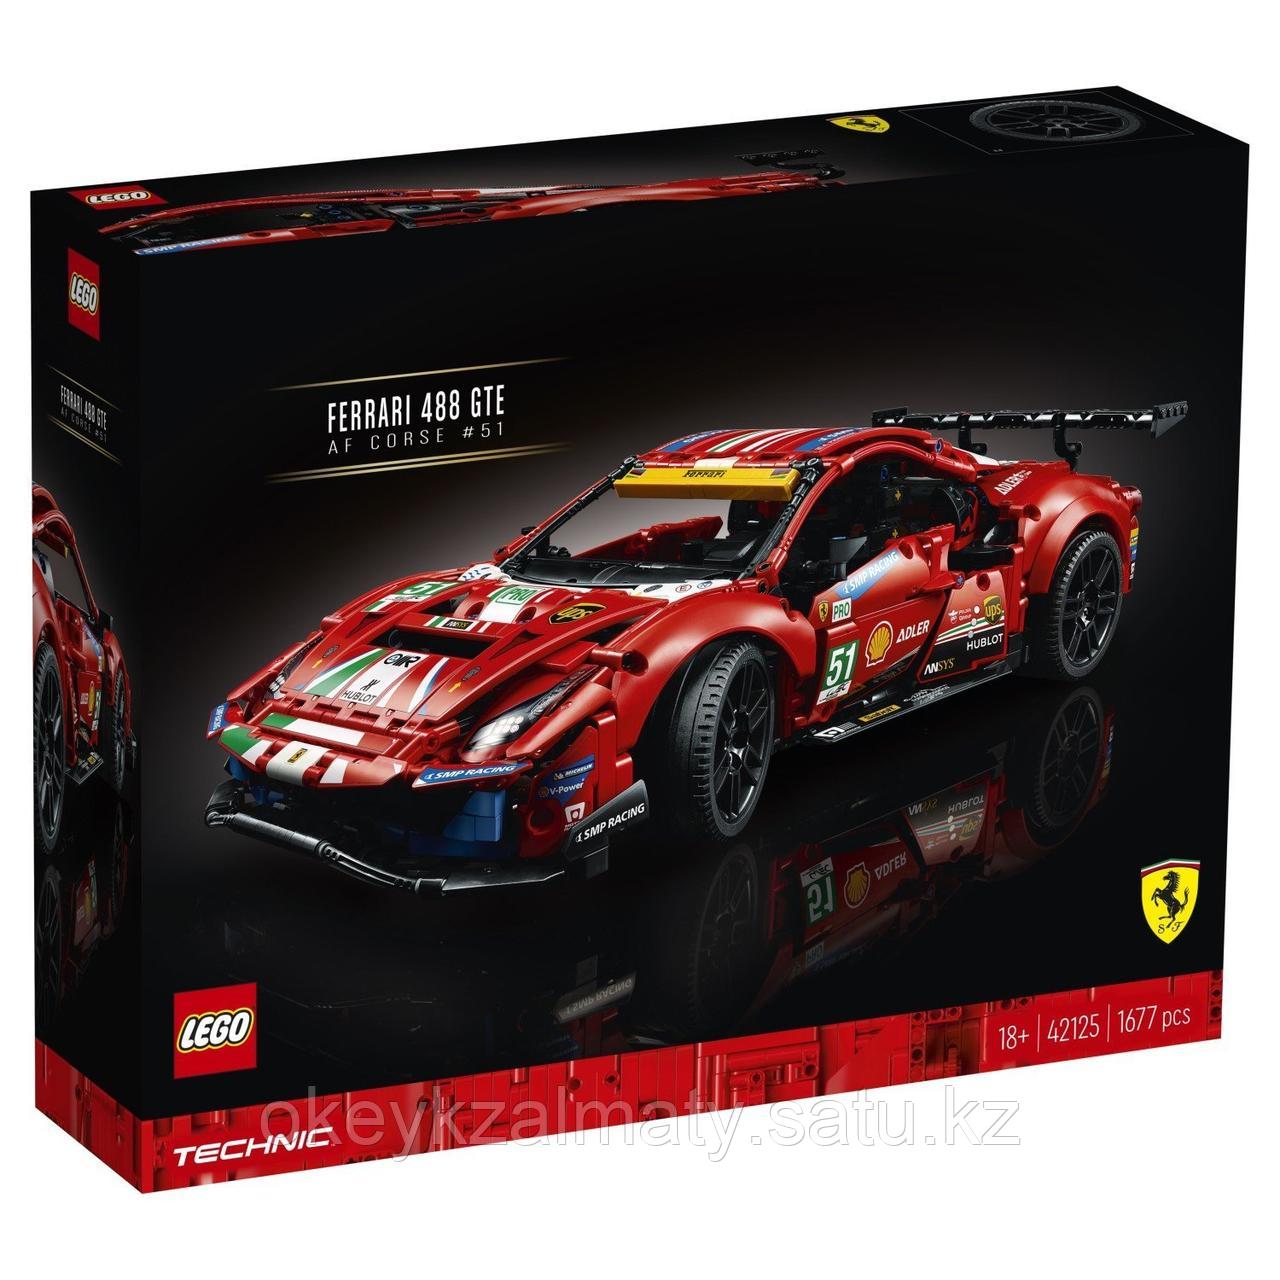 LEGO Technic: Ferrari 488 GTE AF Corse 51, 42125